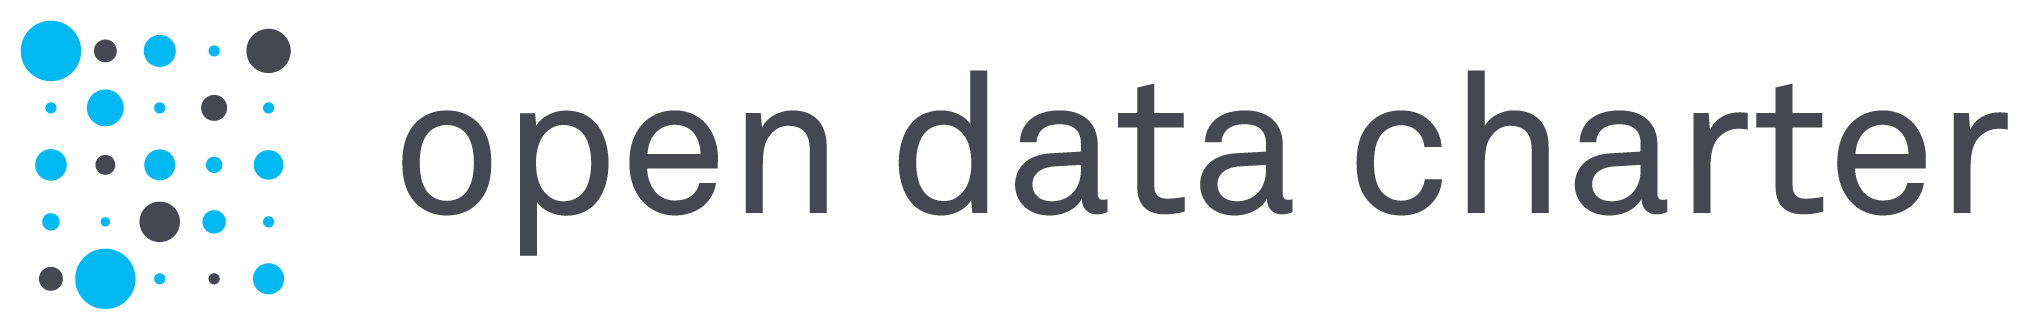 Open Data Charter logo